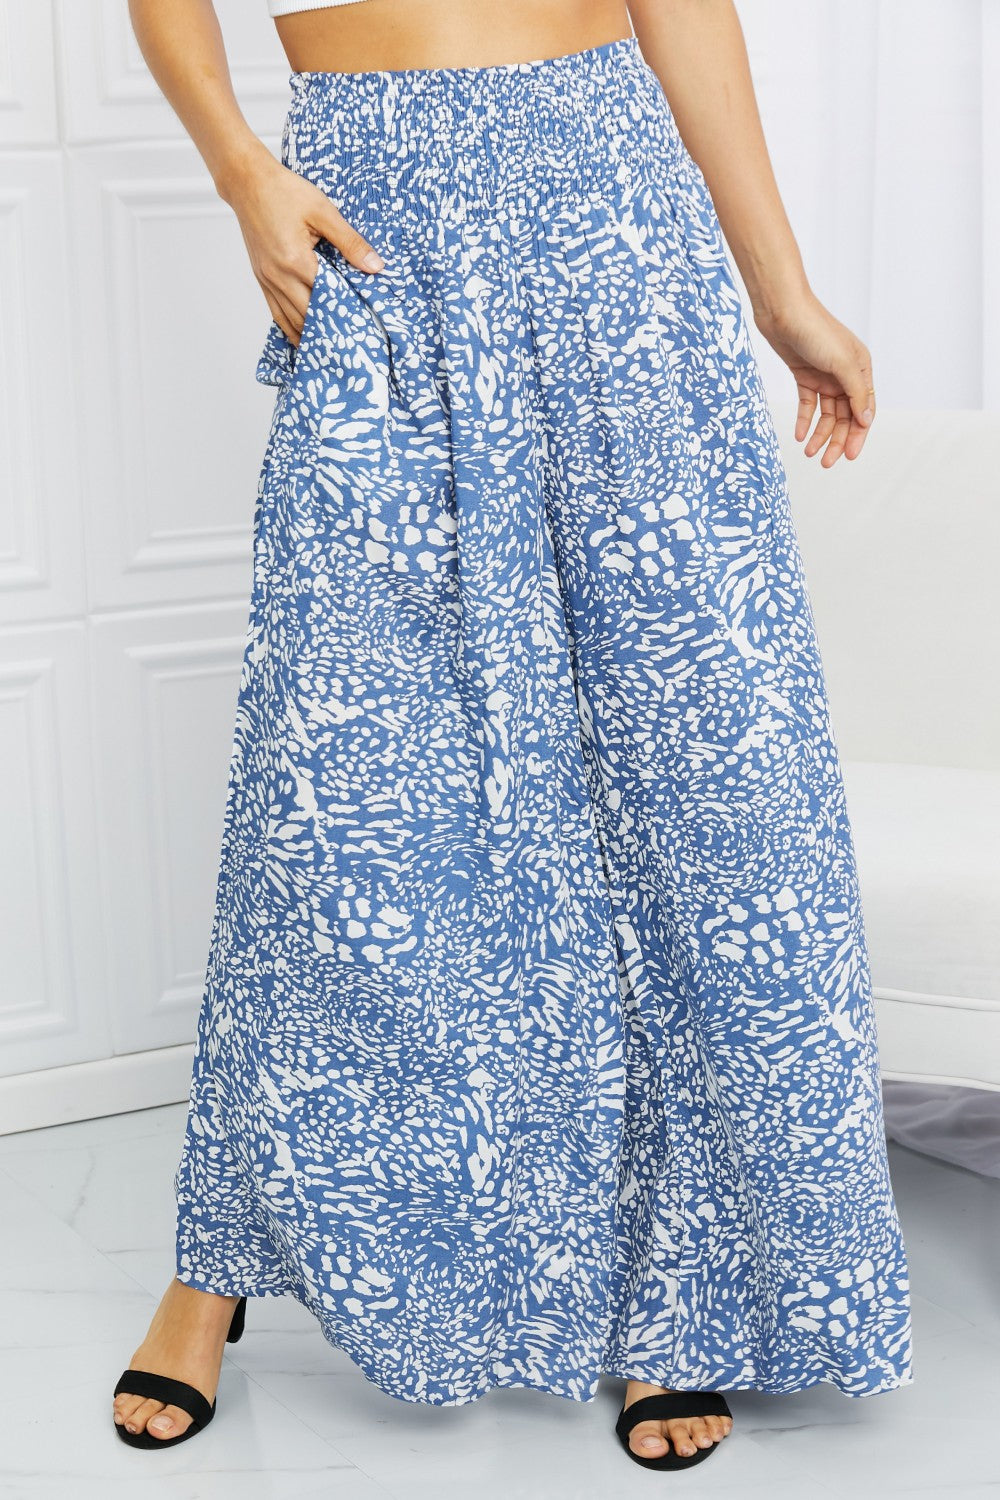 Kori America Full Size Printed Culottes with Pockets | Culottes - CHANELIA